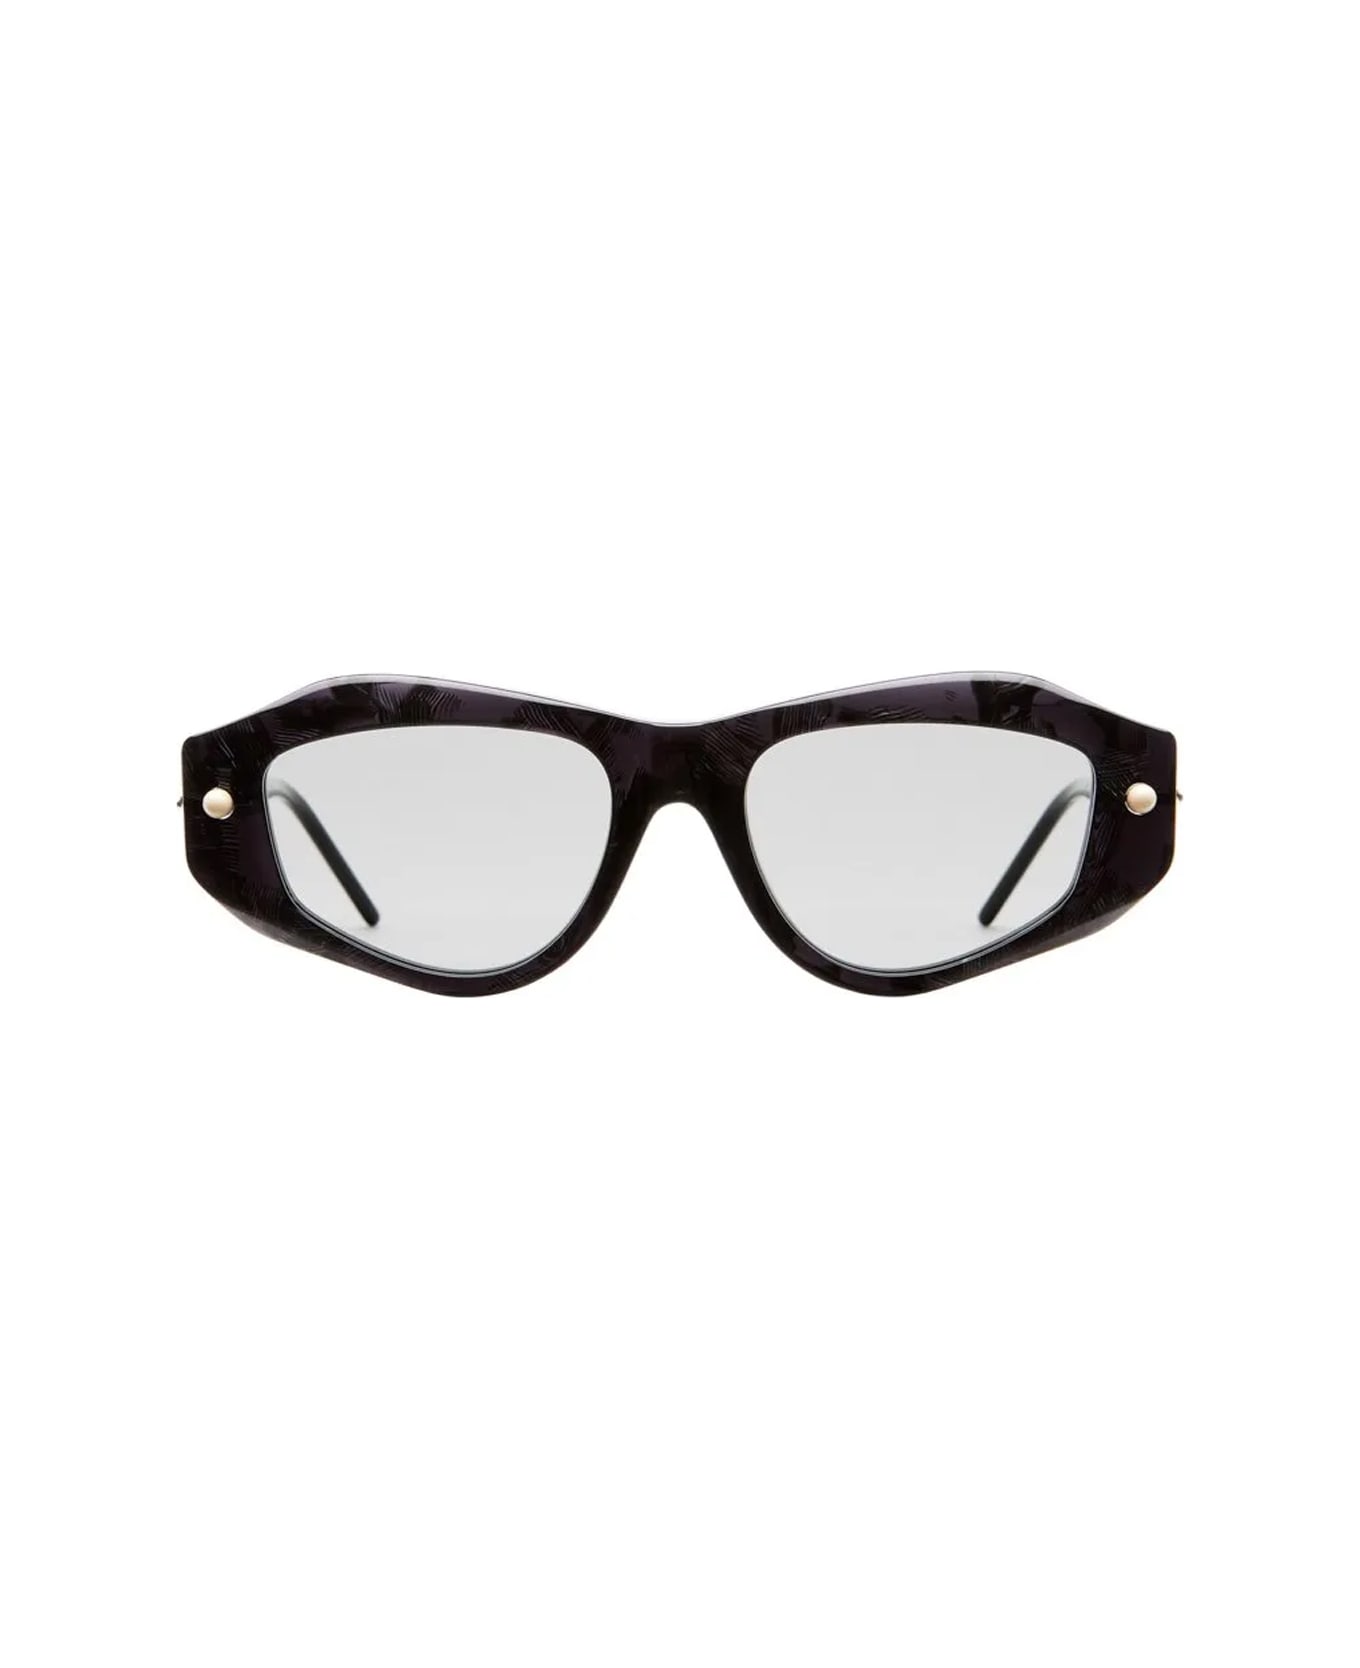 Kuboraum Maske P15 Bkn Glasses - Nero アイウェア